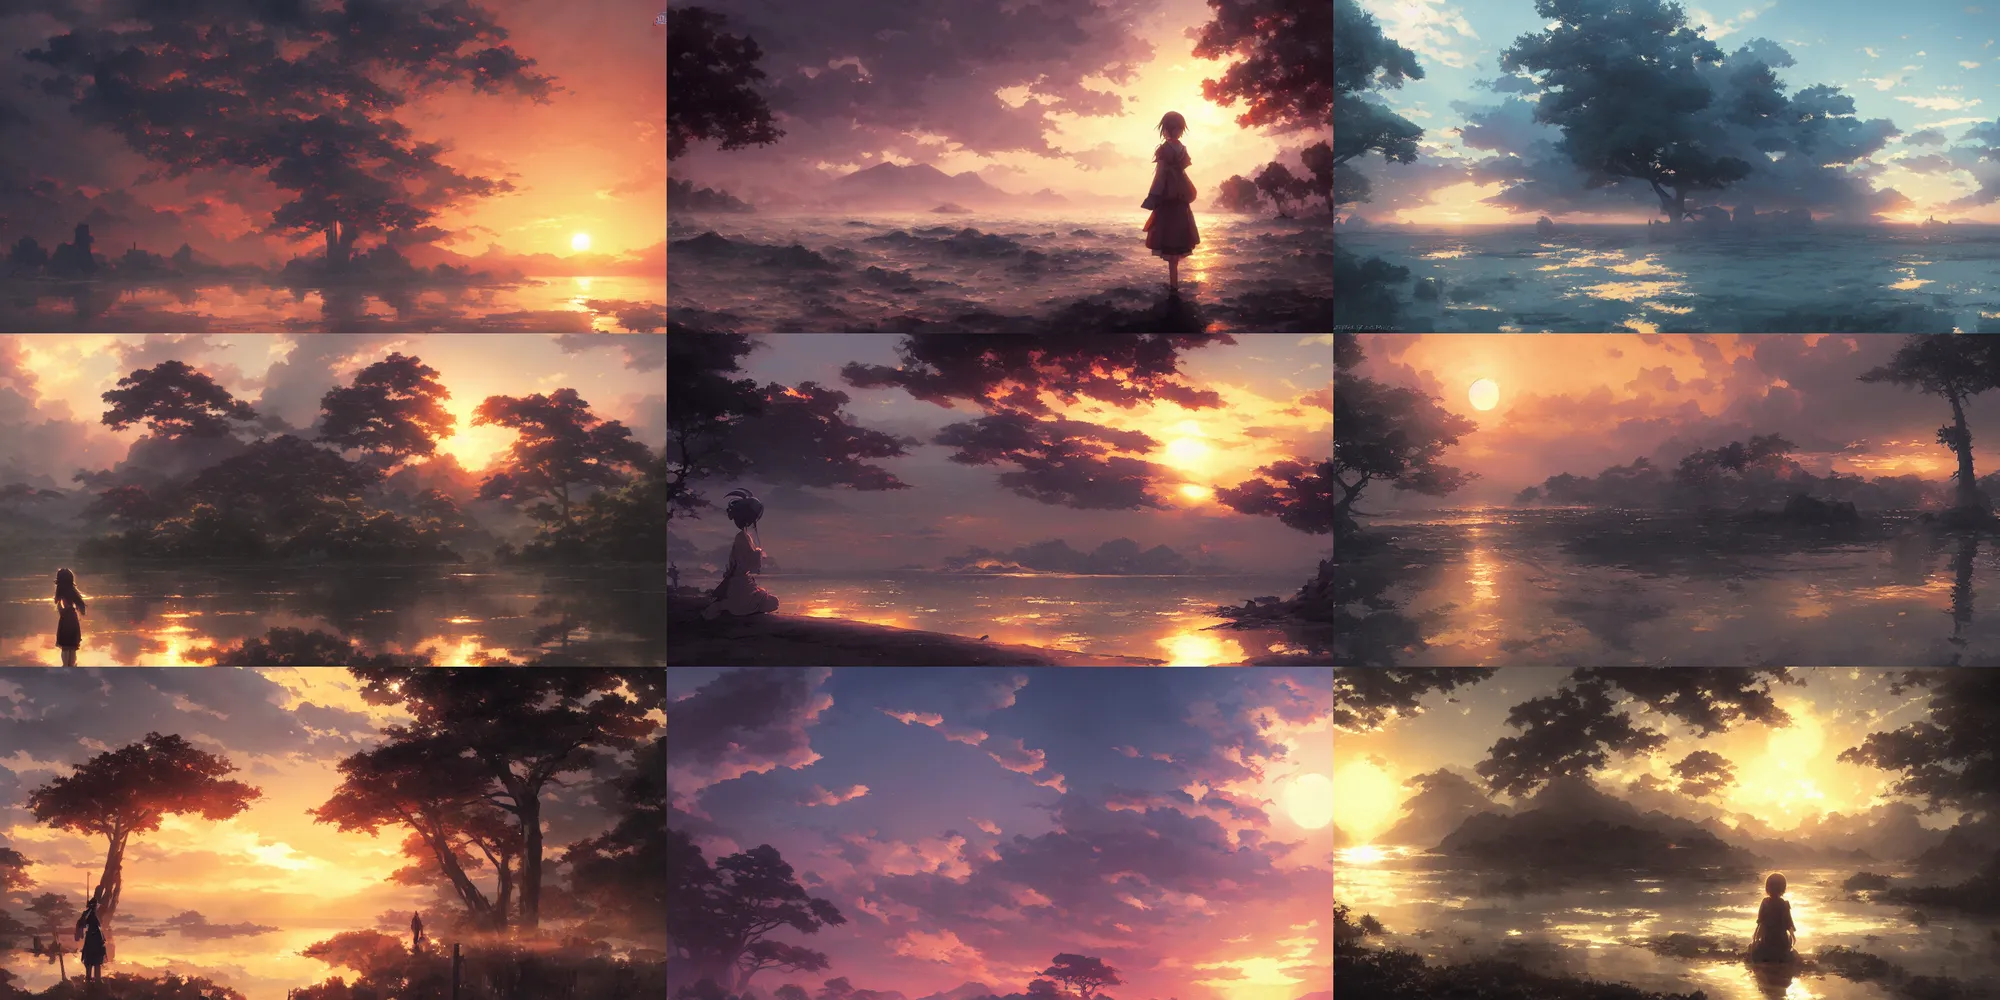 Prompt: anime kyoto animation key by greg rutkowski, sunset